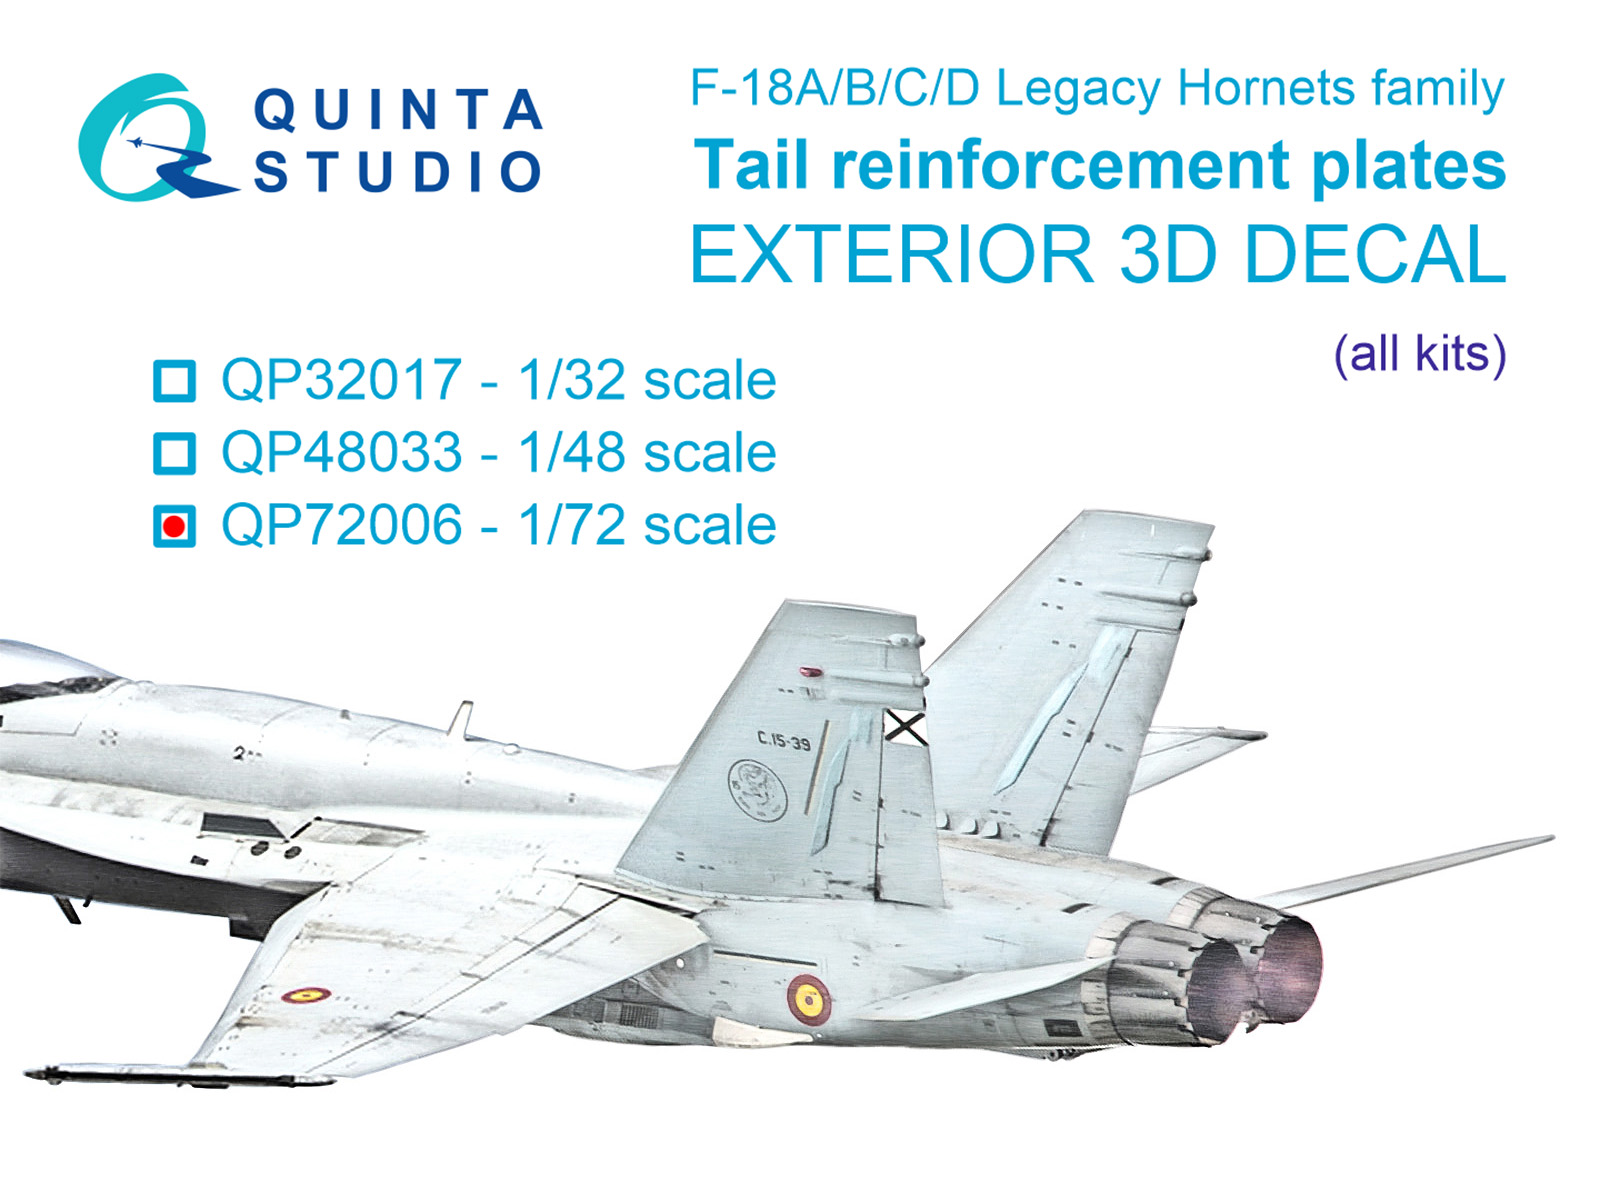 QP72006  декали  Усиливающие килевые накладки F/A-18A/B/C/D (для всех моделей)  (1:72)